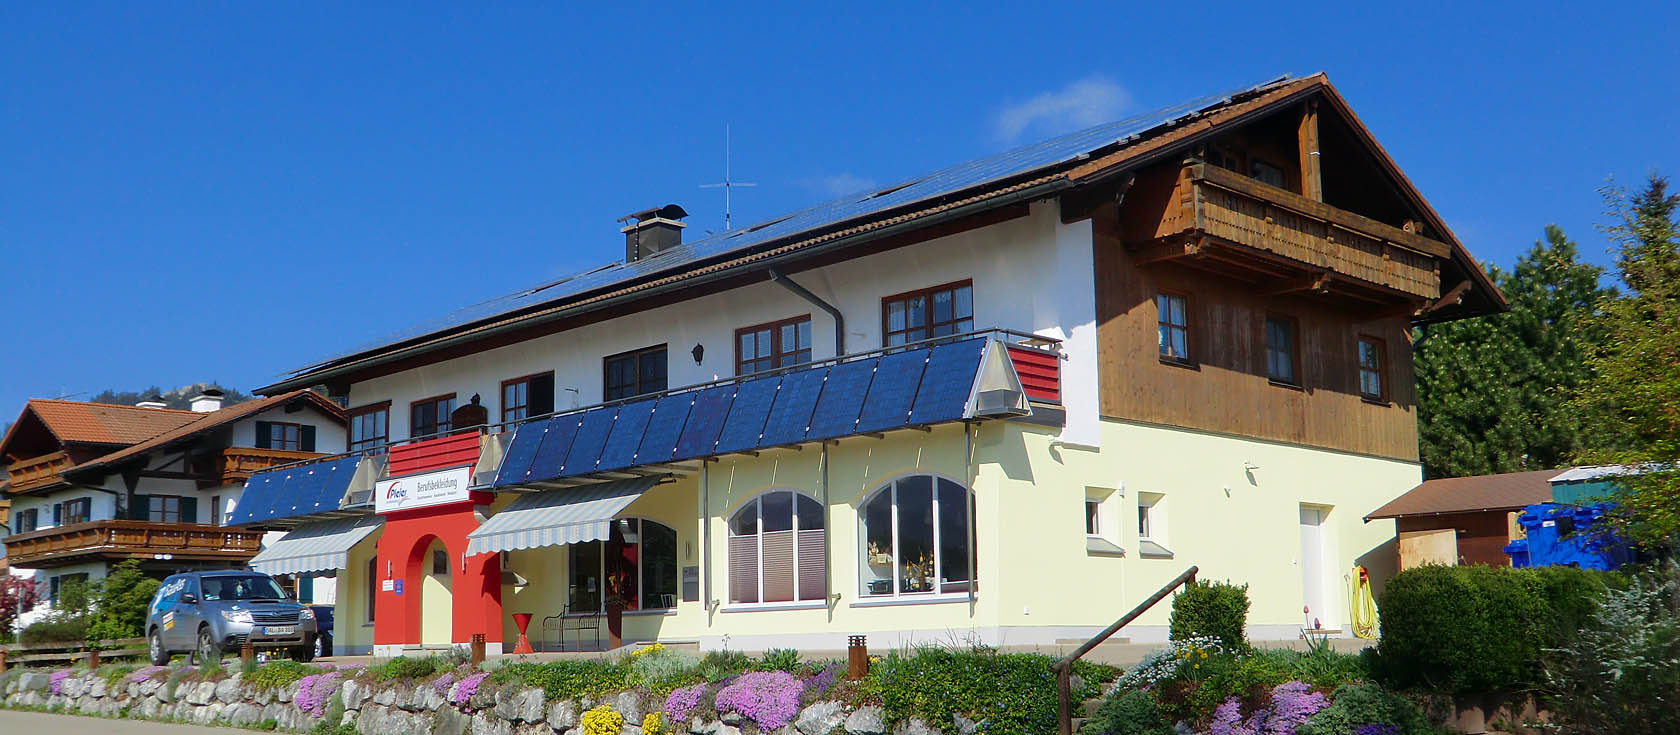 Photovoltaik - Balkongeländer